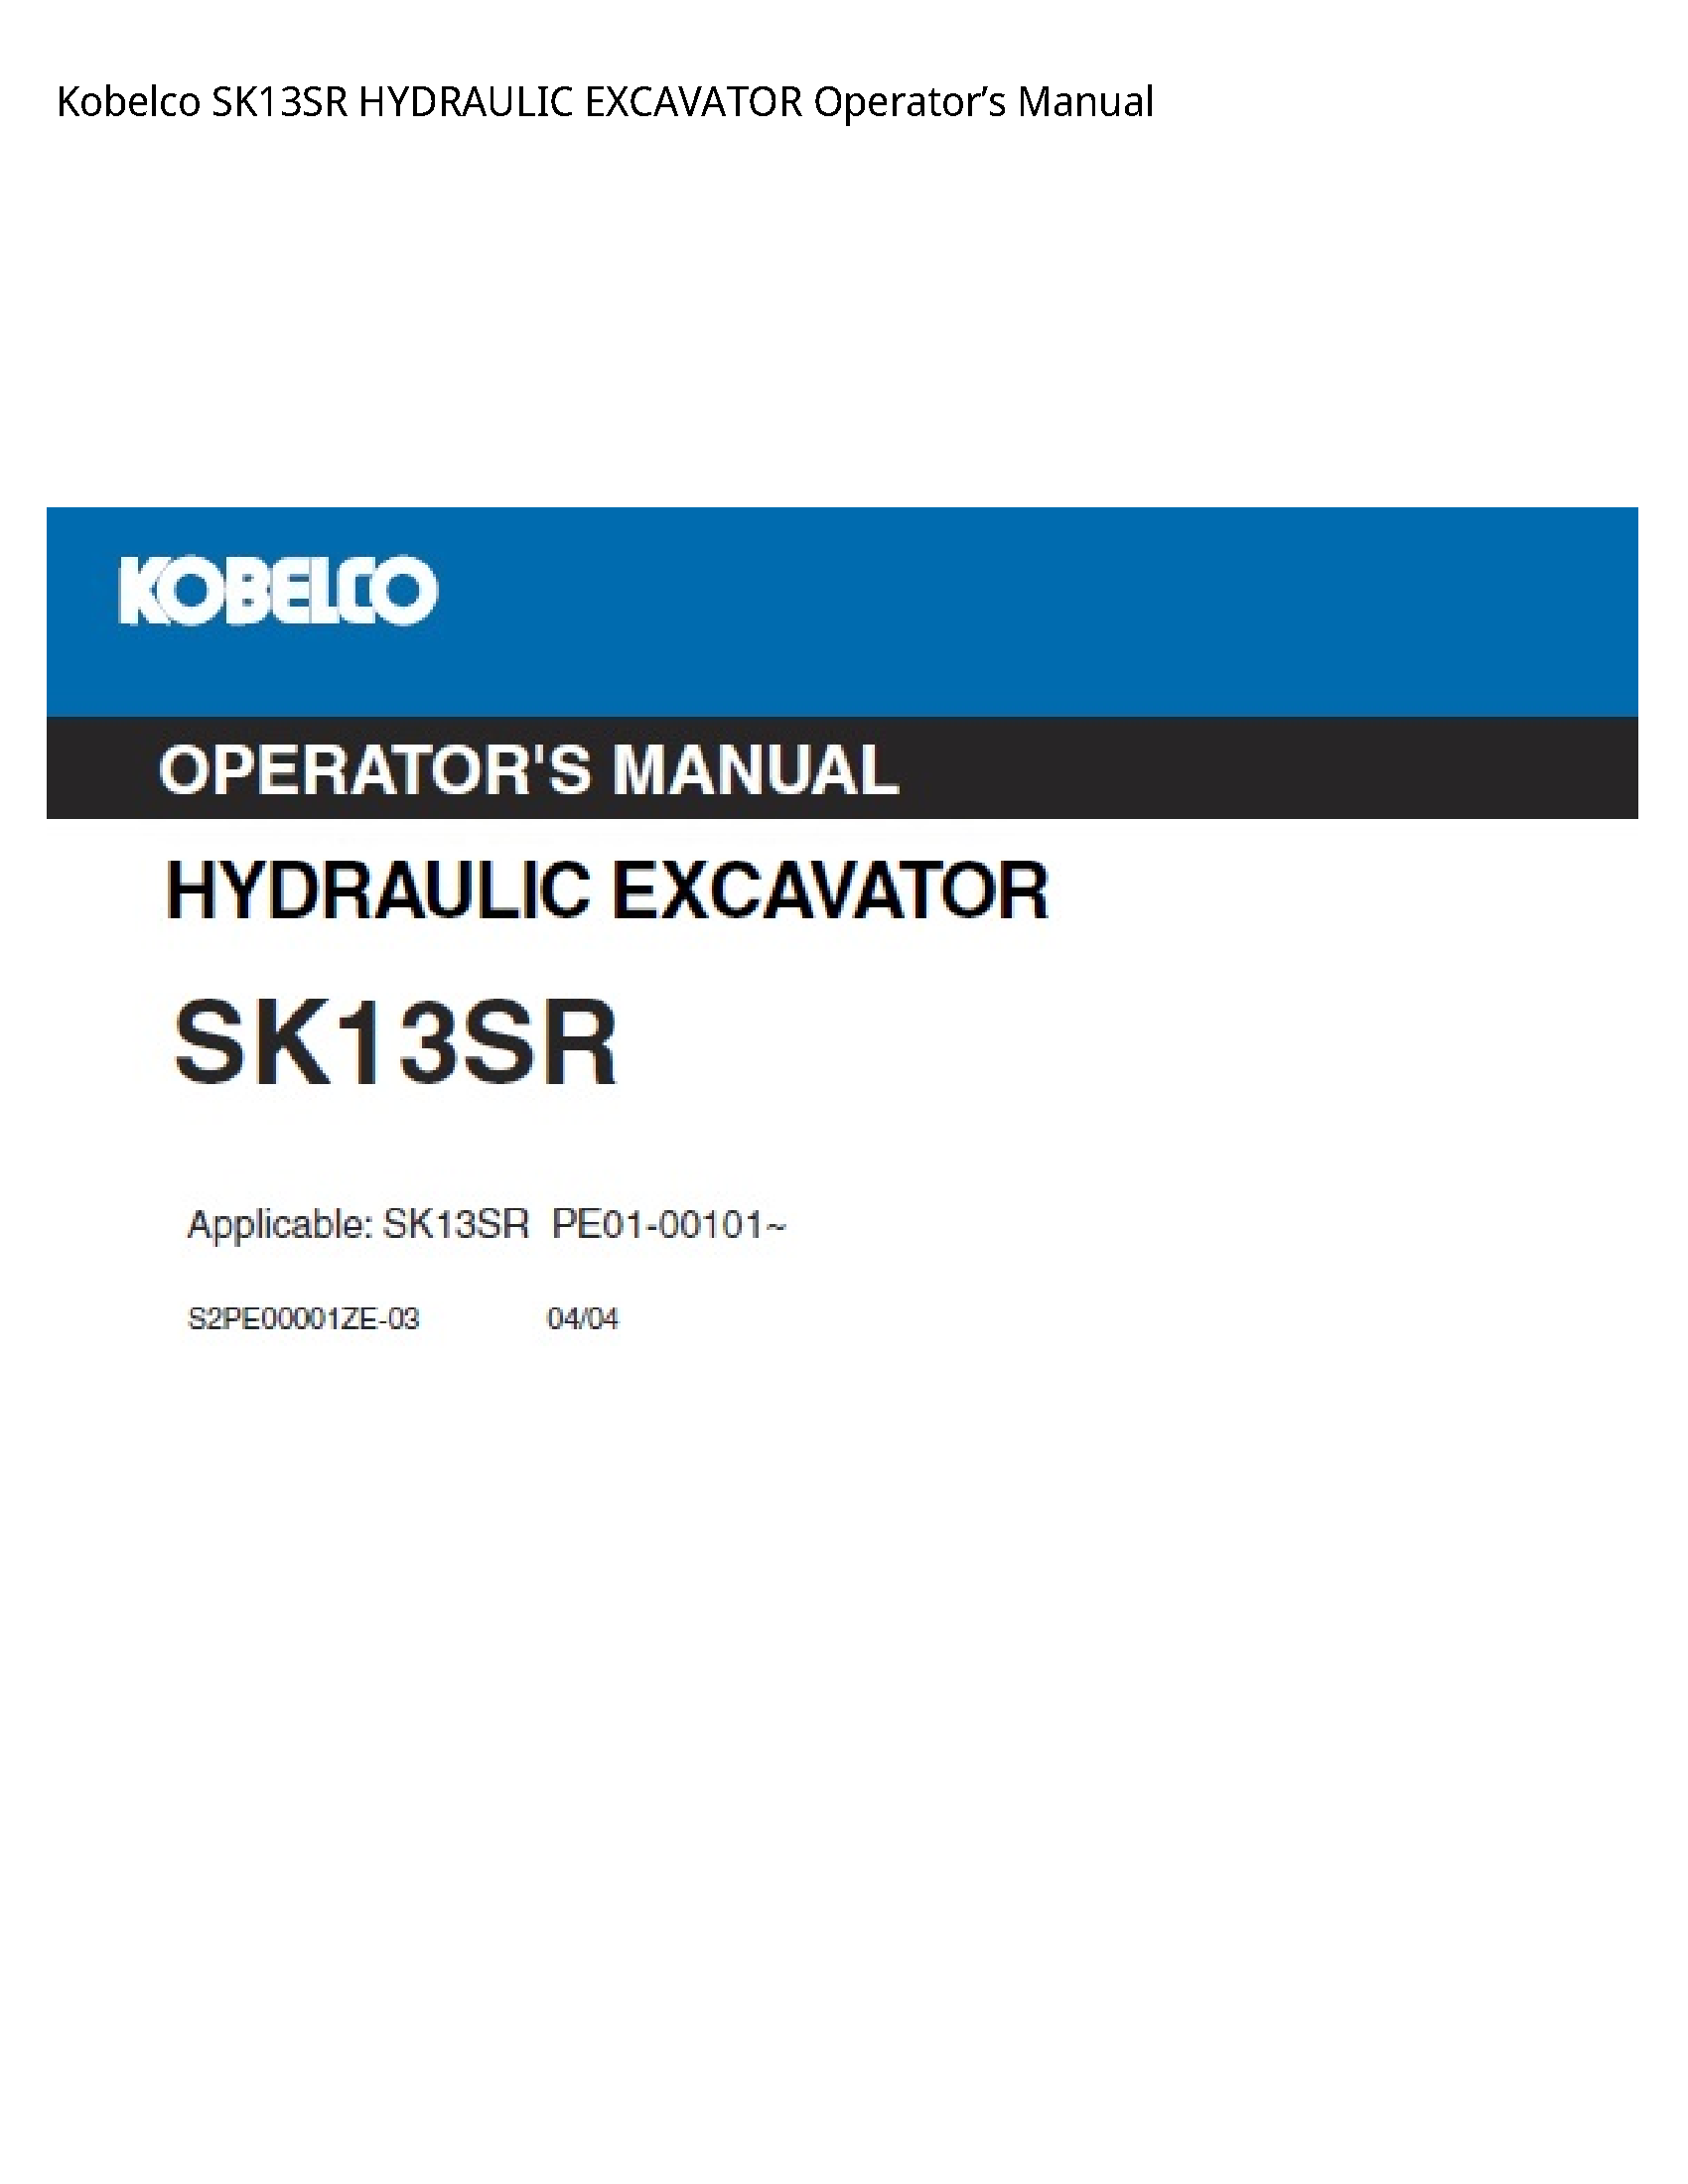 Kobelco SK13SR HYDRAULIC EXCAVATOR Operator’s manual